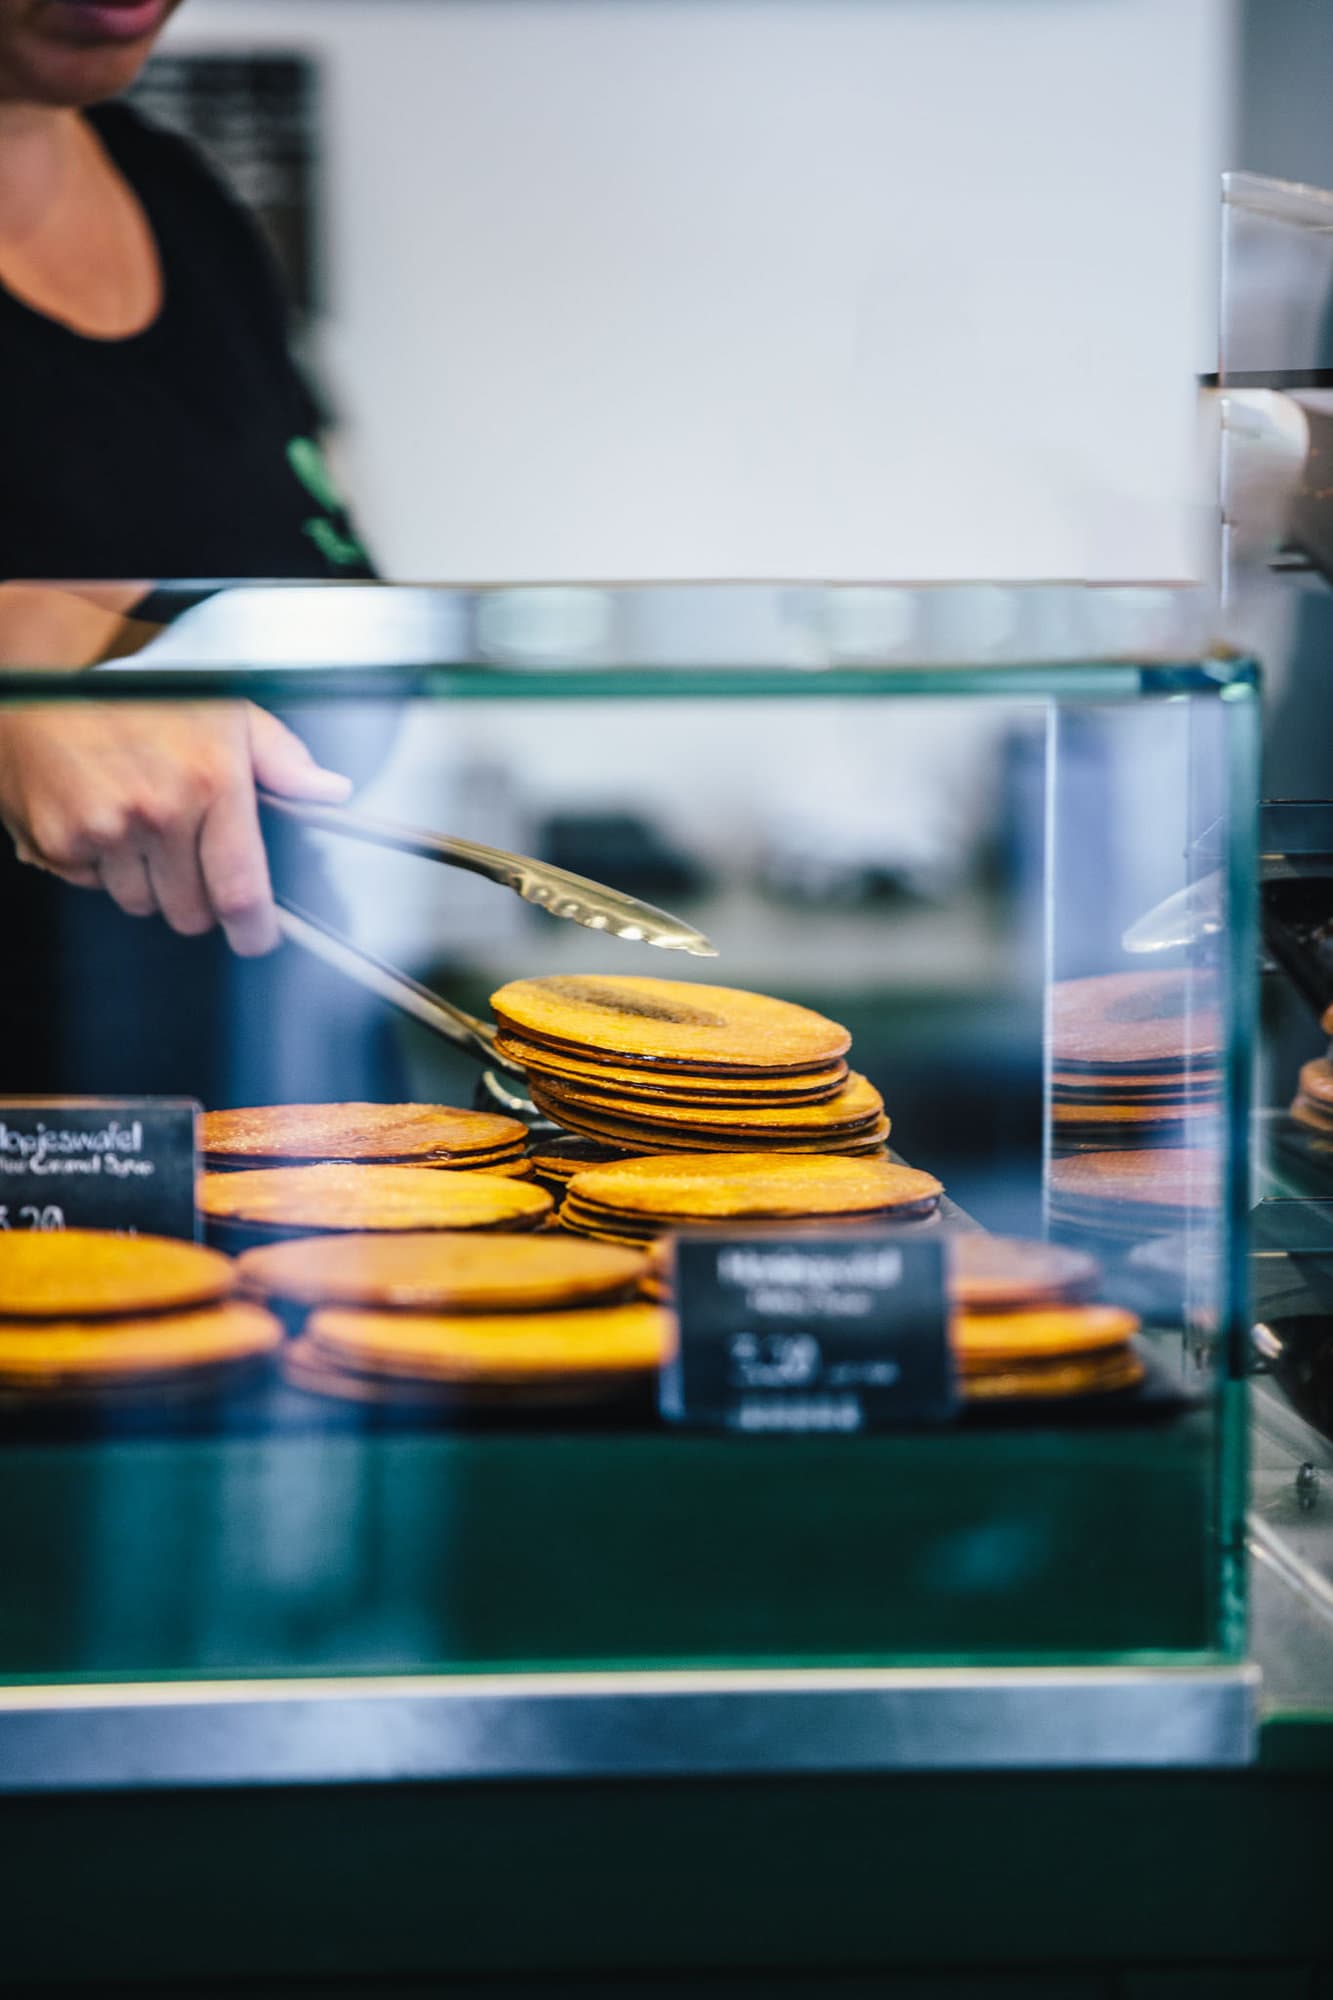 Stroopwafels or caramel waffles at Lanskroon bakery, shot for boutique hotel The Dylan Amsterdam